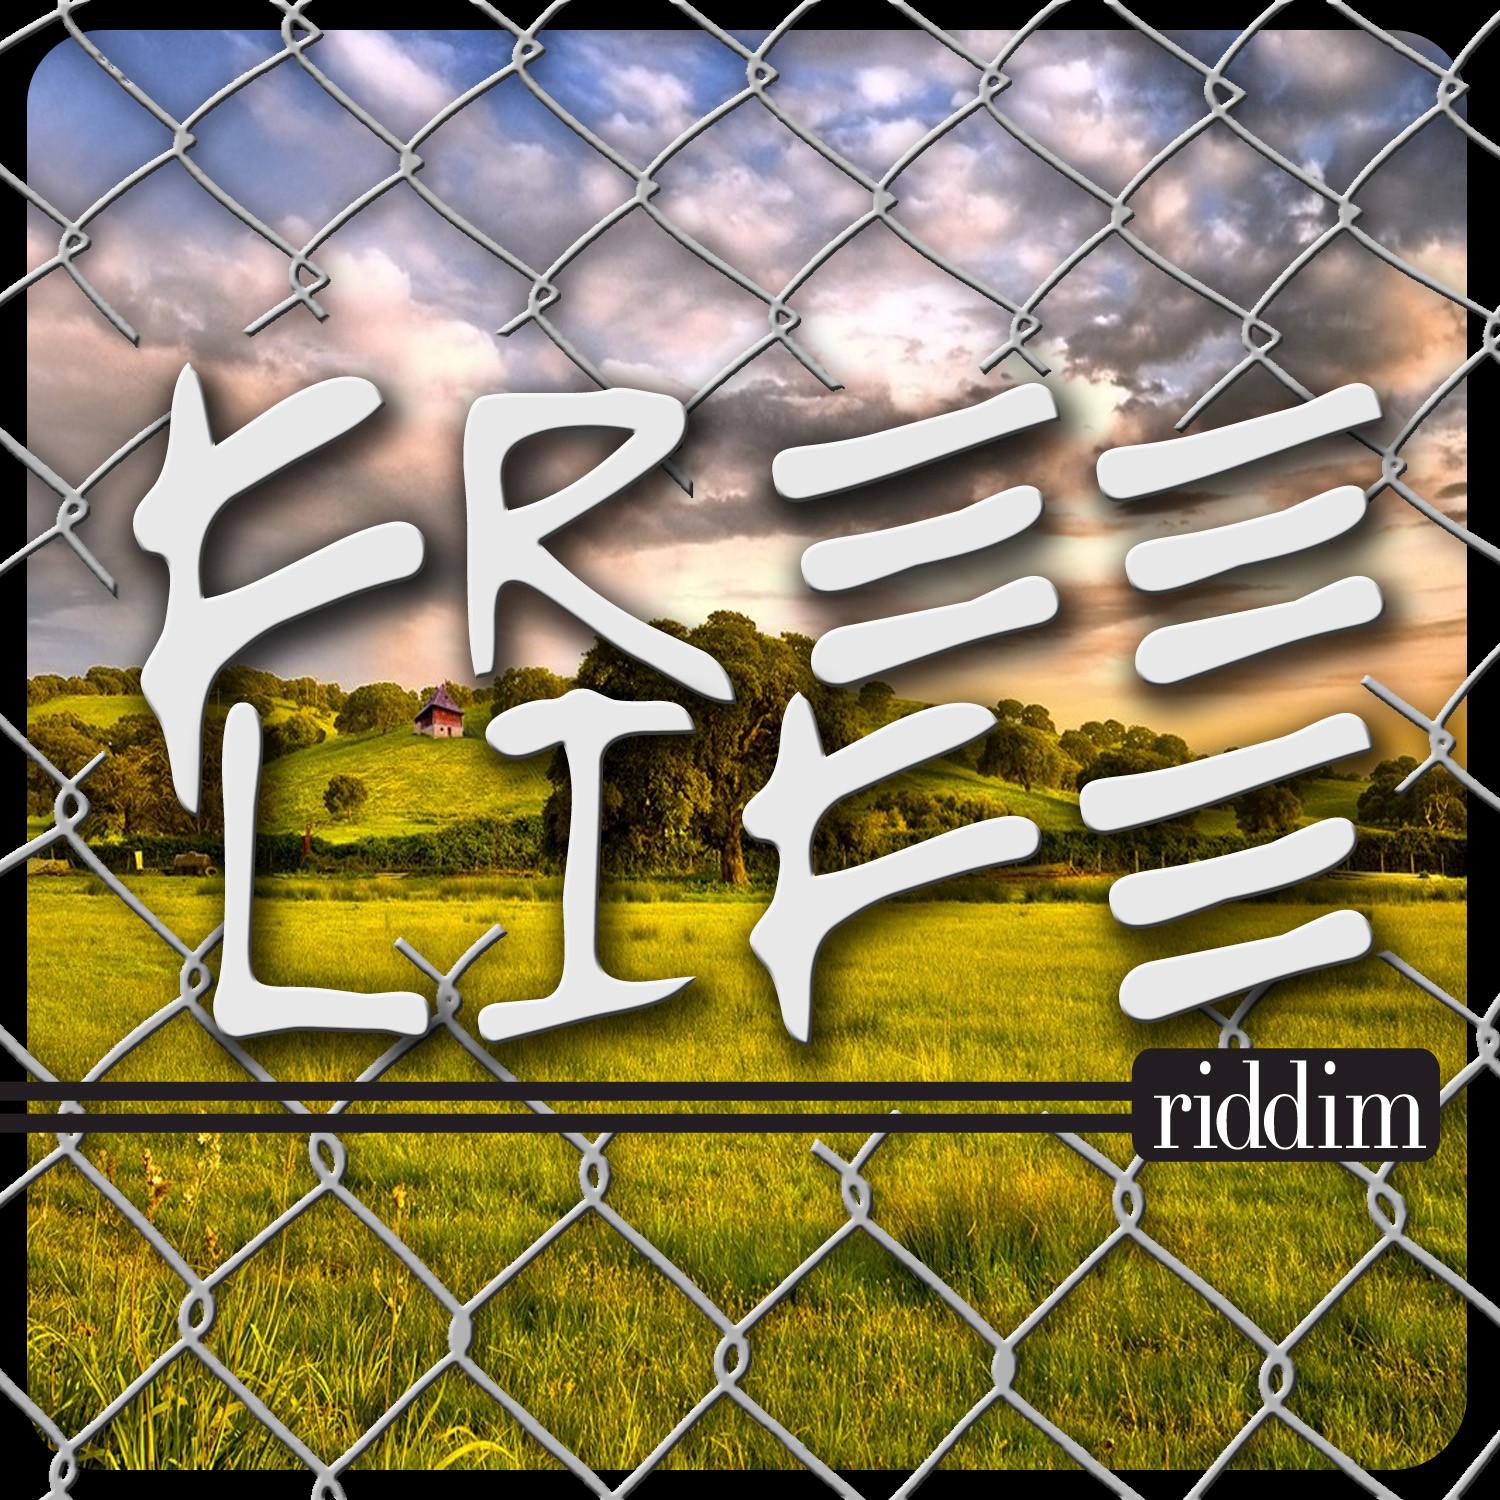 Free Life Riddim